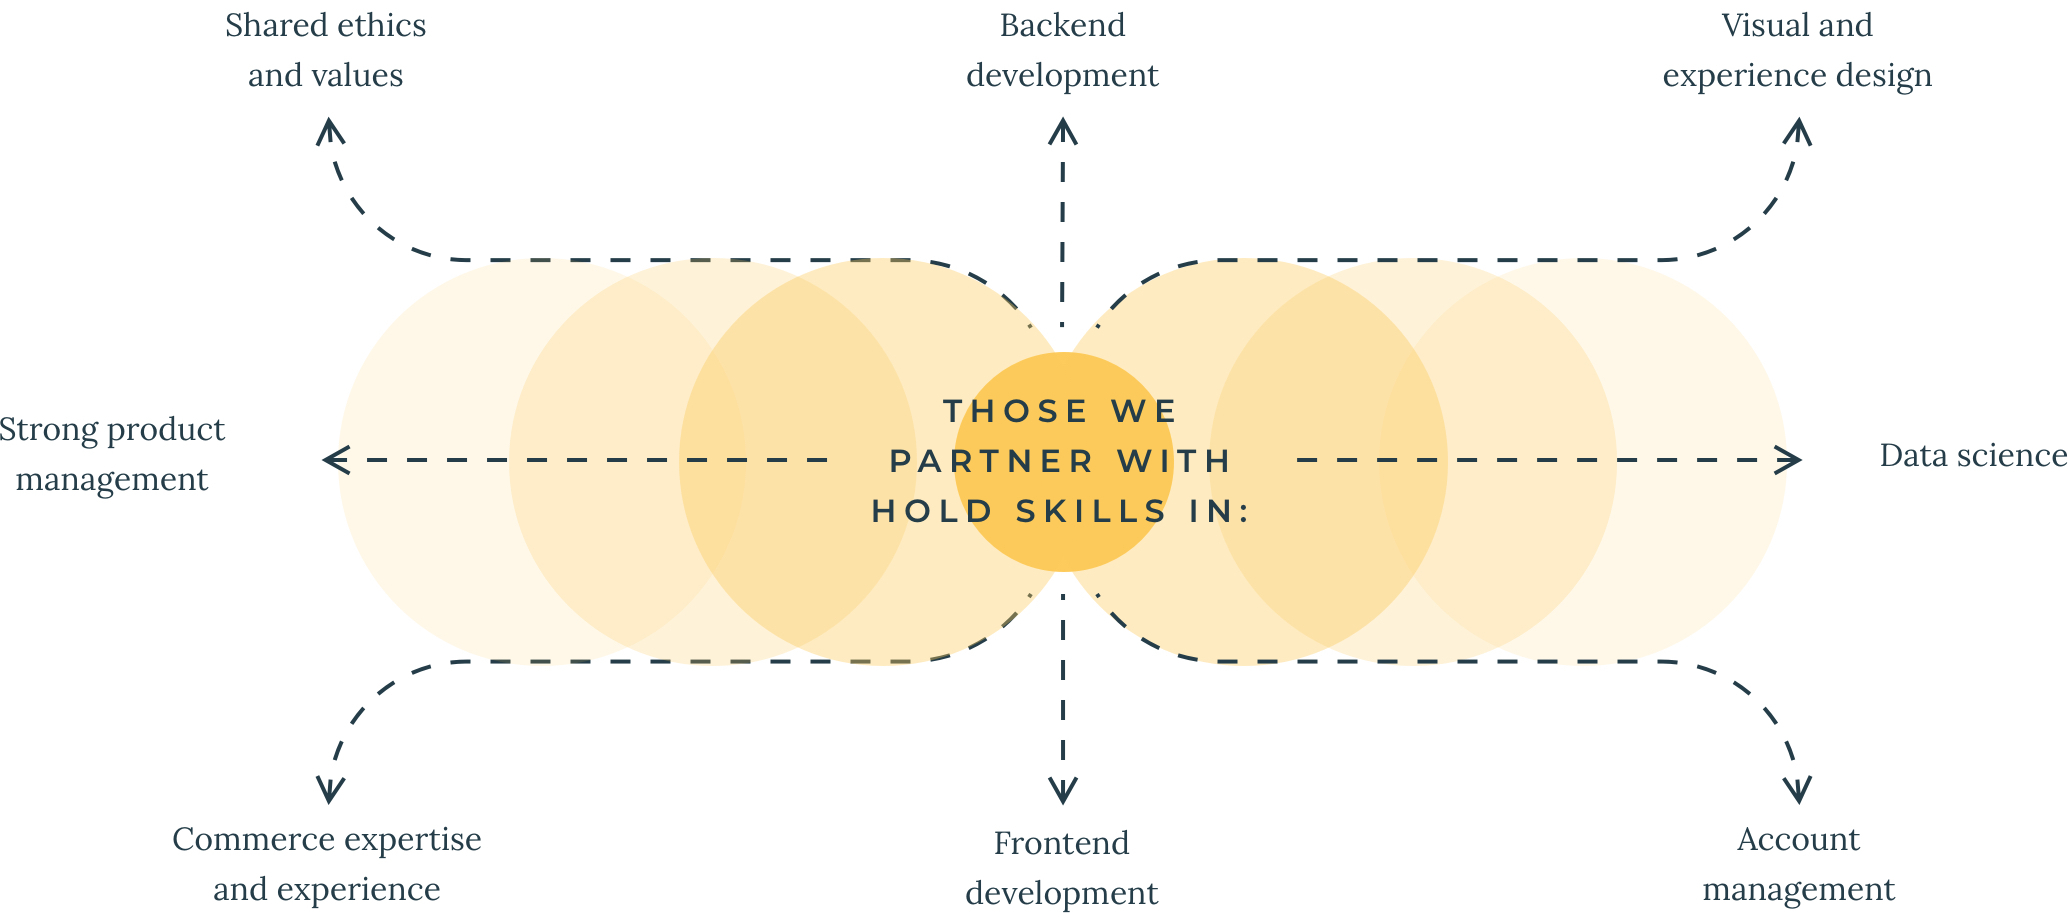 How do we define partners